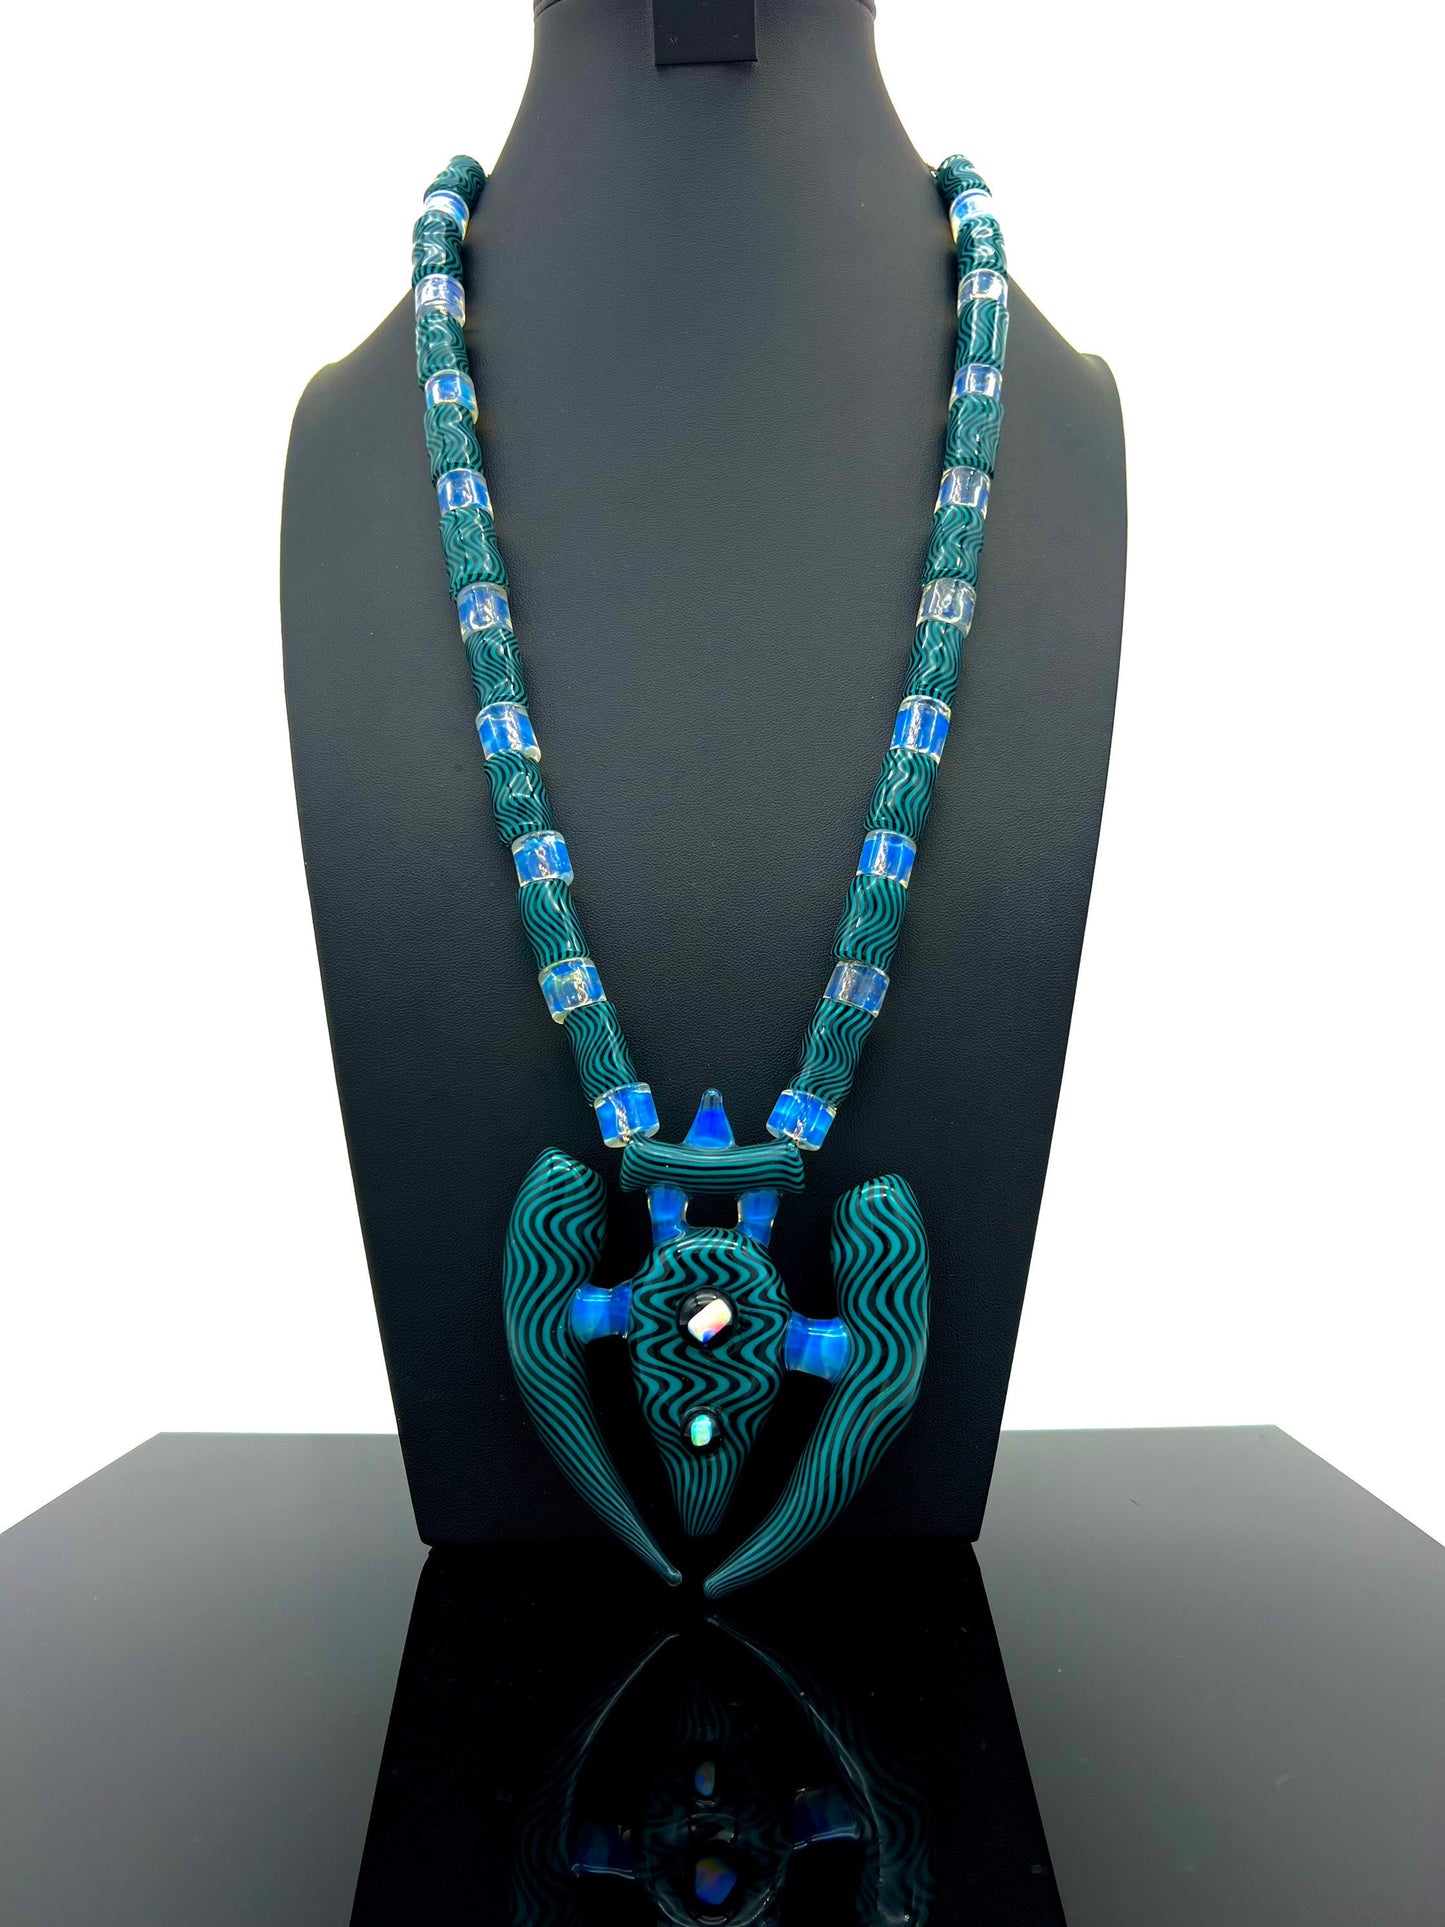 Handmade Heady AquaBird Aqua Blue and Black WigWag with Ghost Accents Full Bead Jewelry Pendant Interstellar Set #2 with Centerpiece